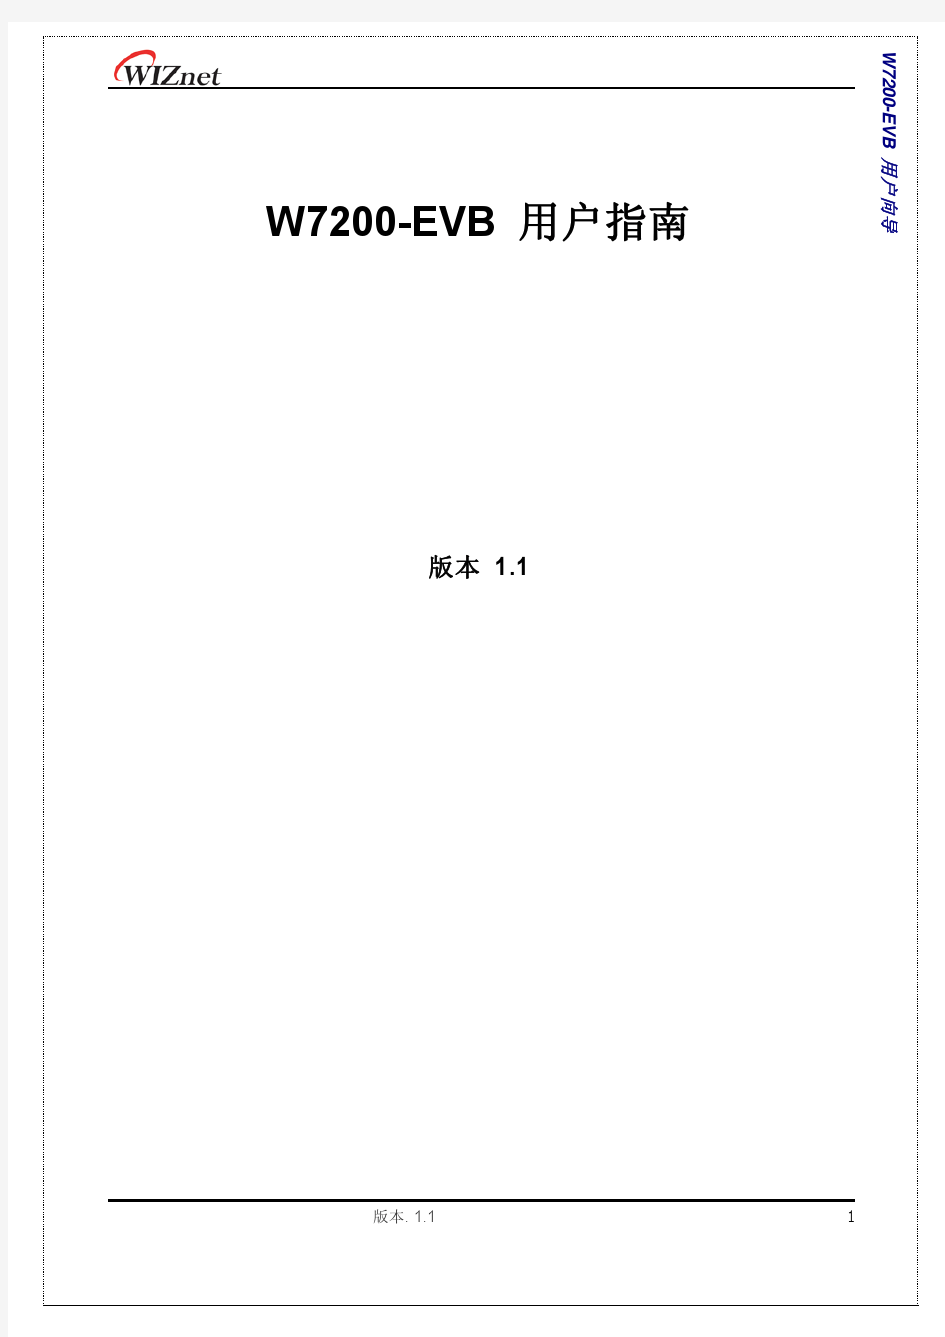 W7200_EVB用户指南中文版